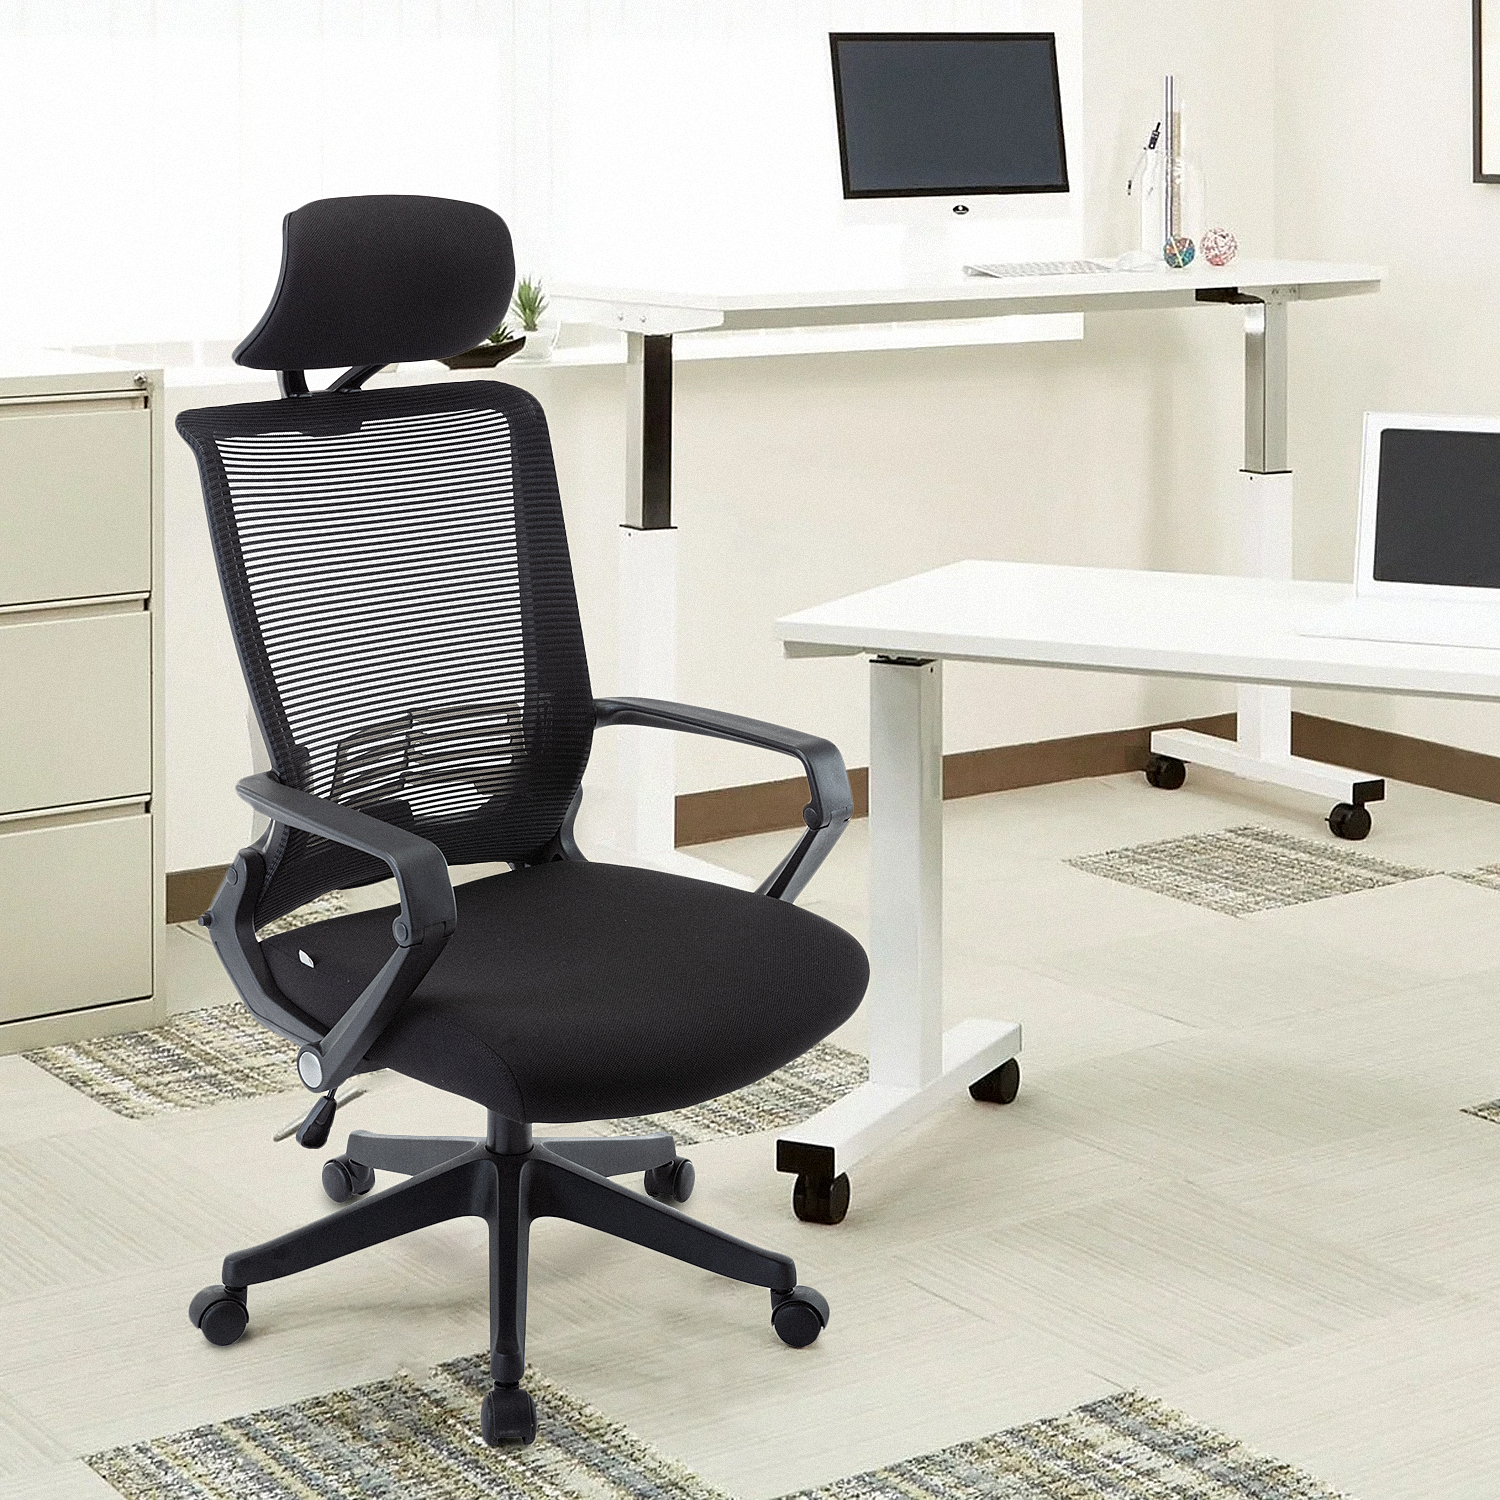 Mesh Office Chair, High Back Chair - Adjustable Headrest with Arms, Lumbar Support-CASAINC